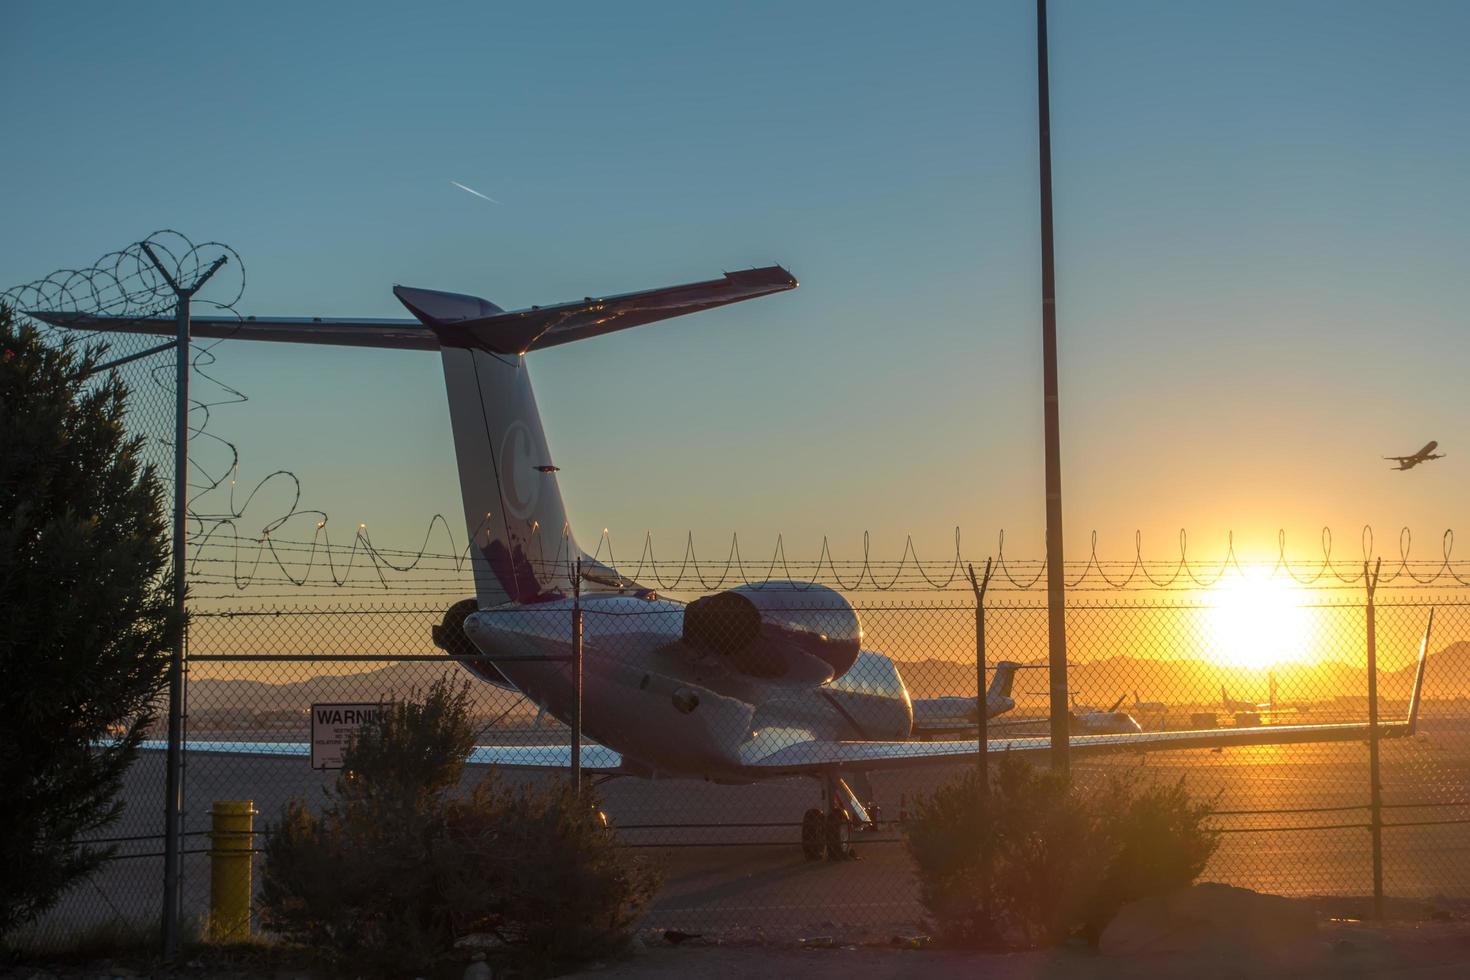 Las Vegas, Nevada, 2021 - Sunrise at the airport photo